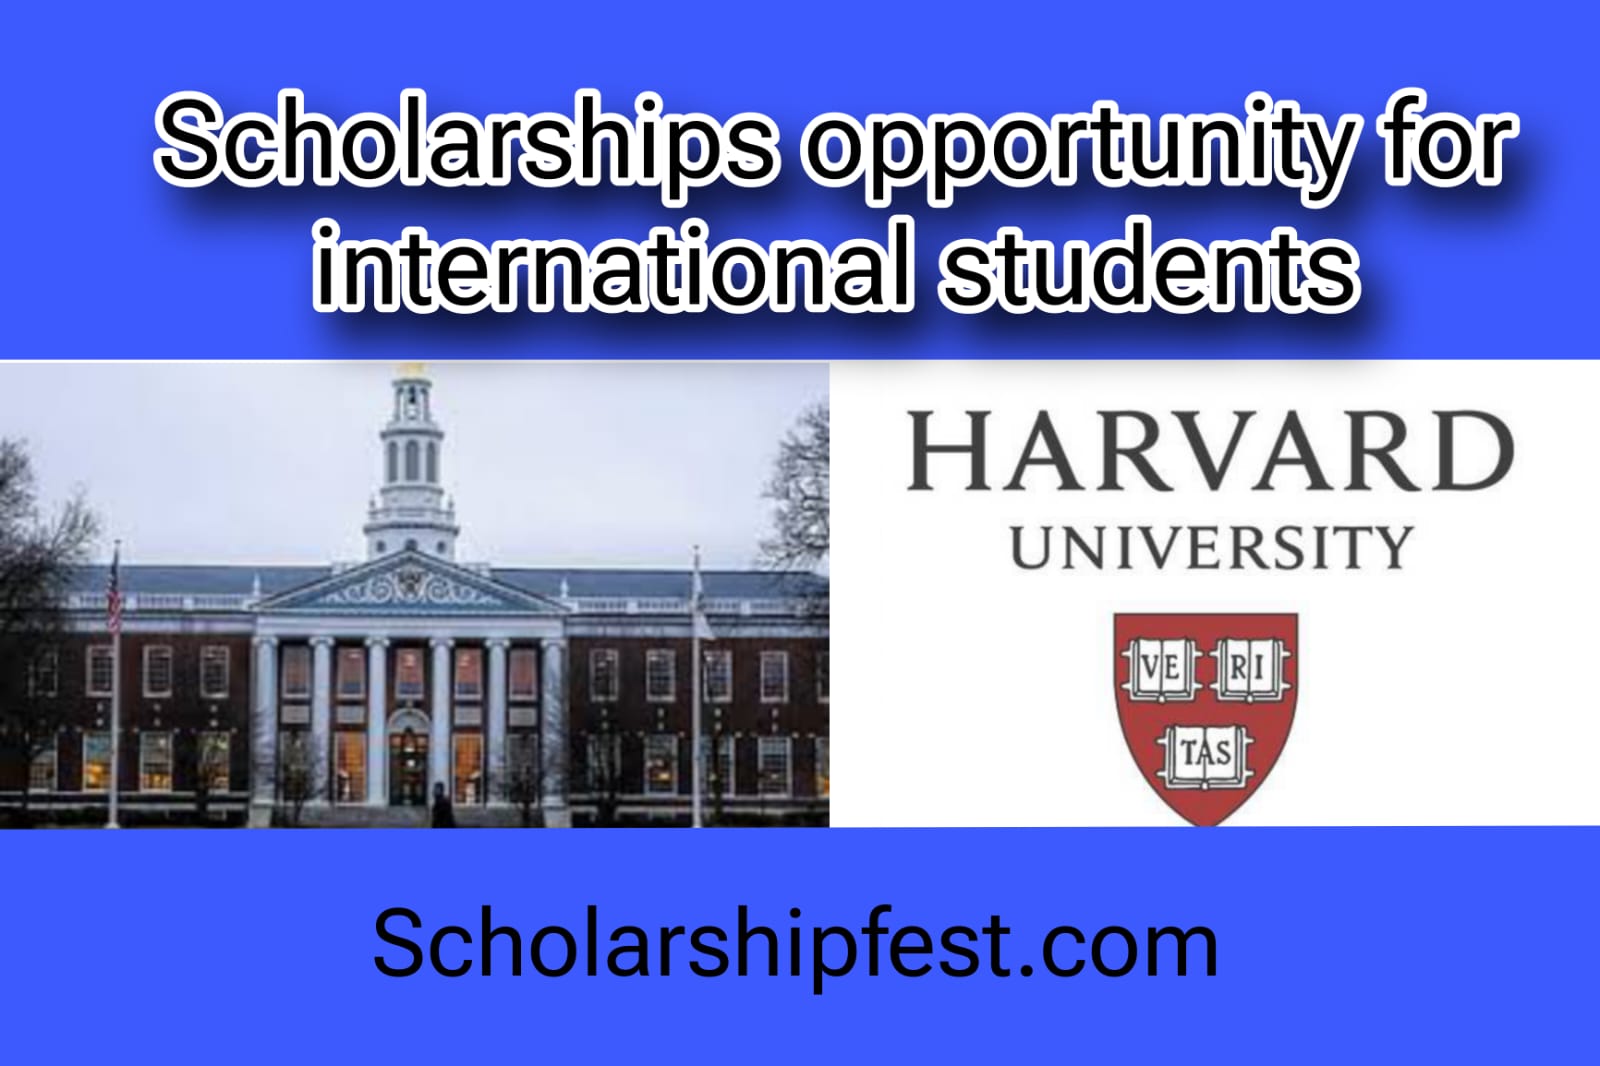 harvard university scholarships for international students